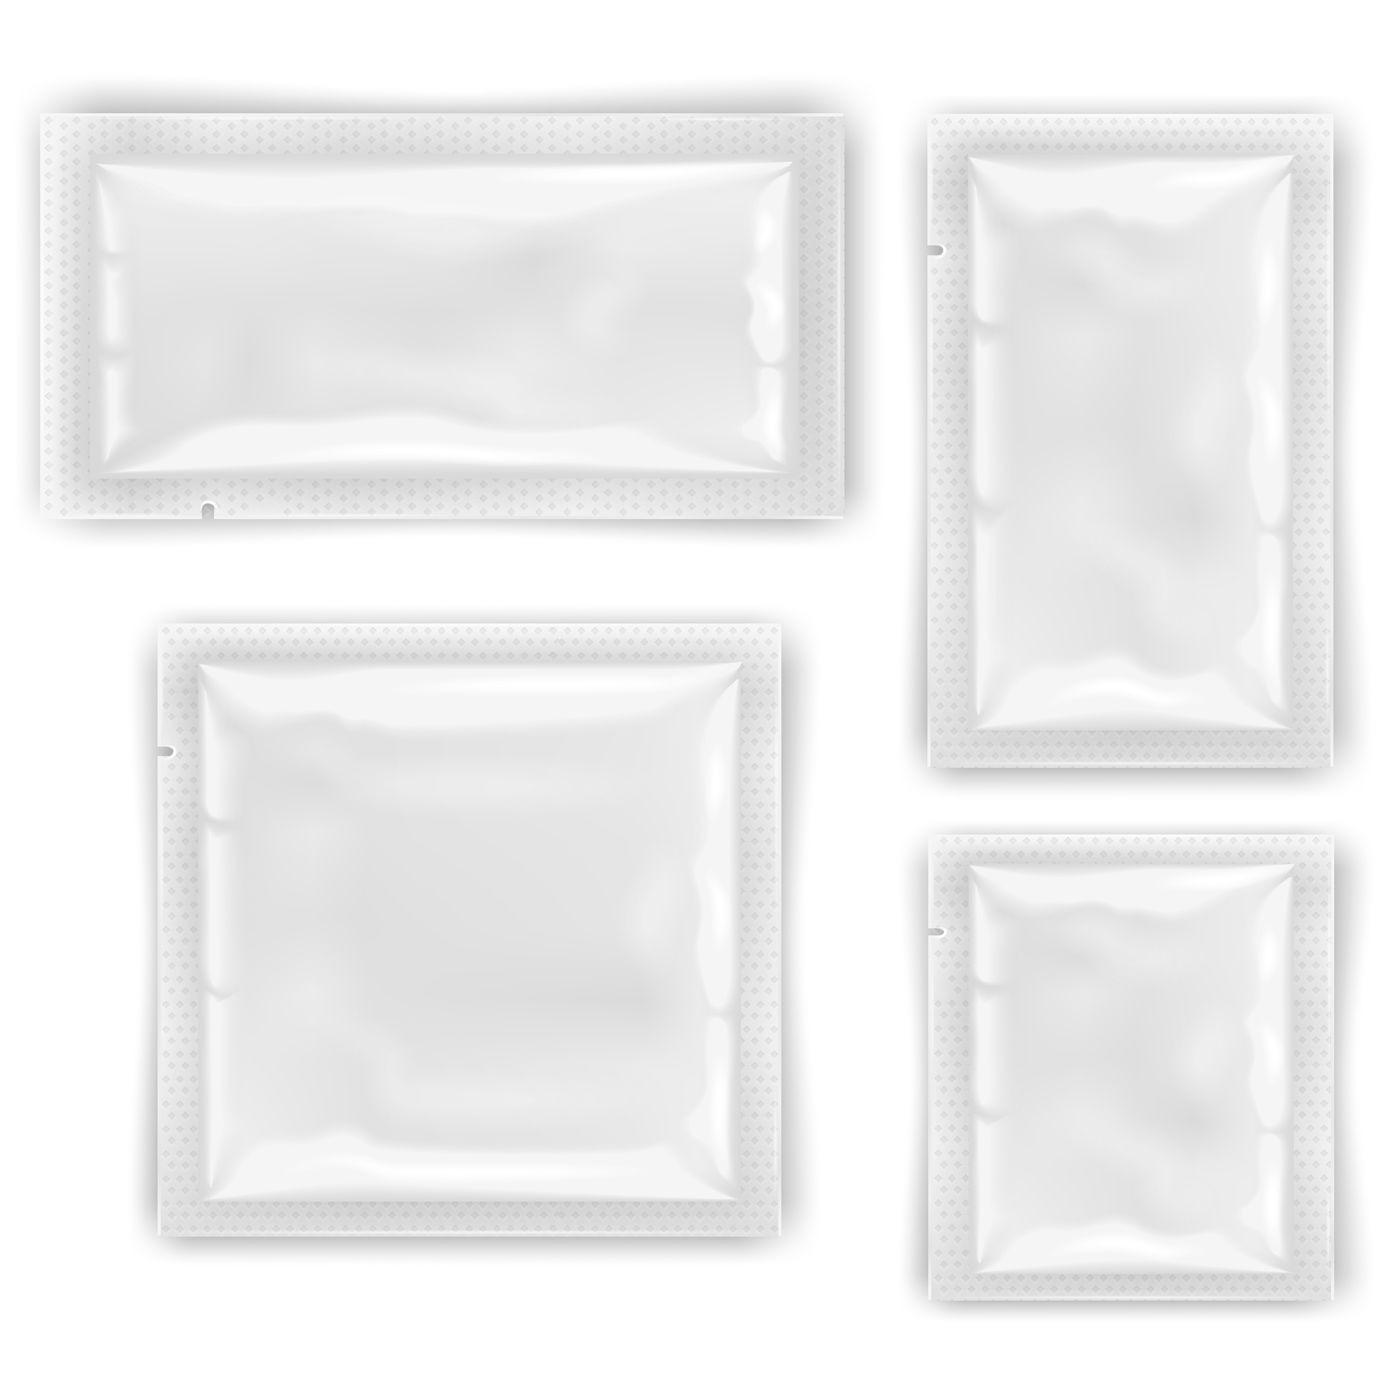 Download Condom Packaging Mockup - Free Mockups | PSD Template ...